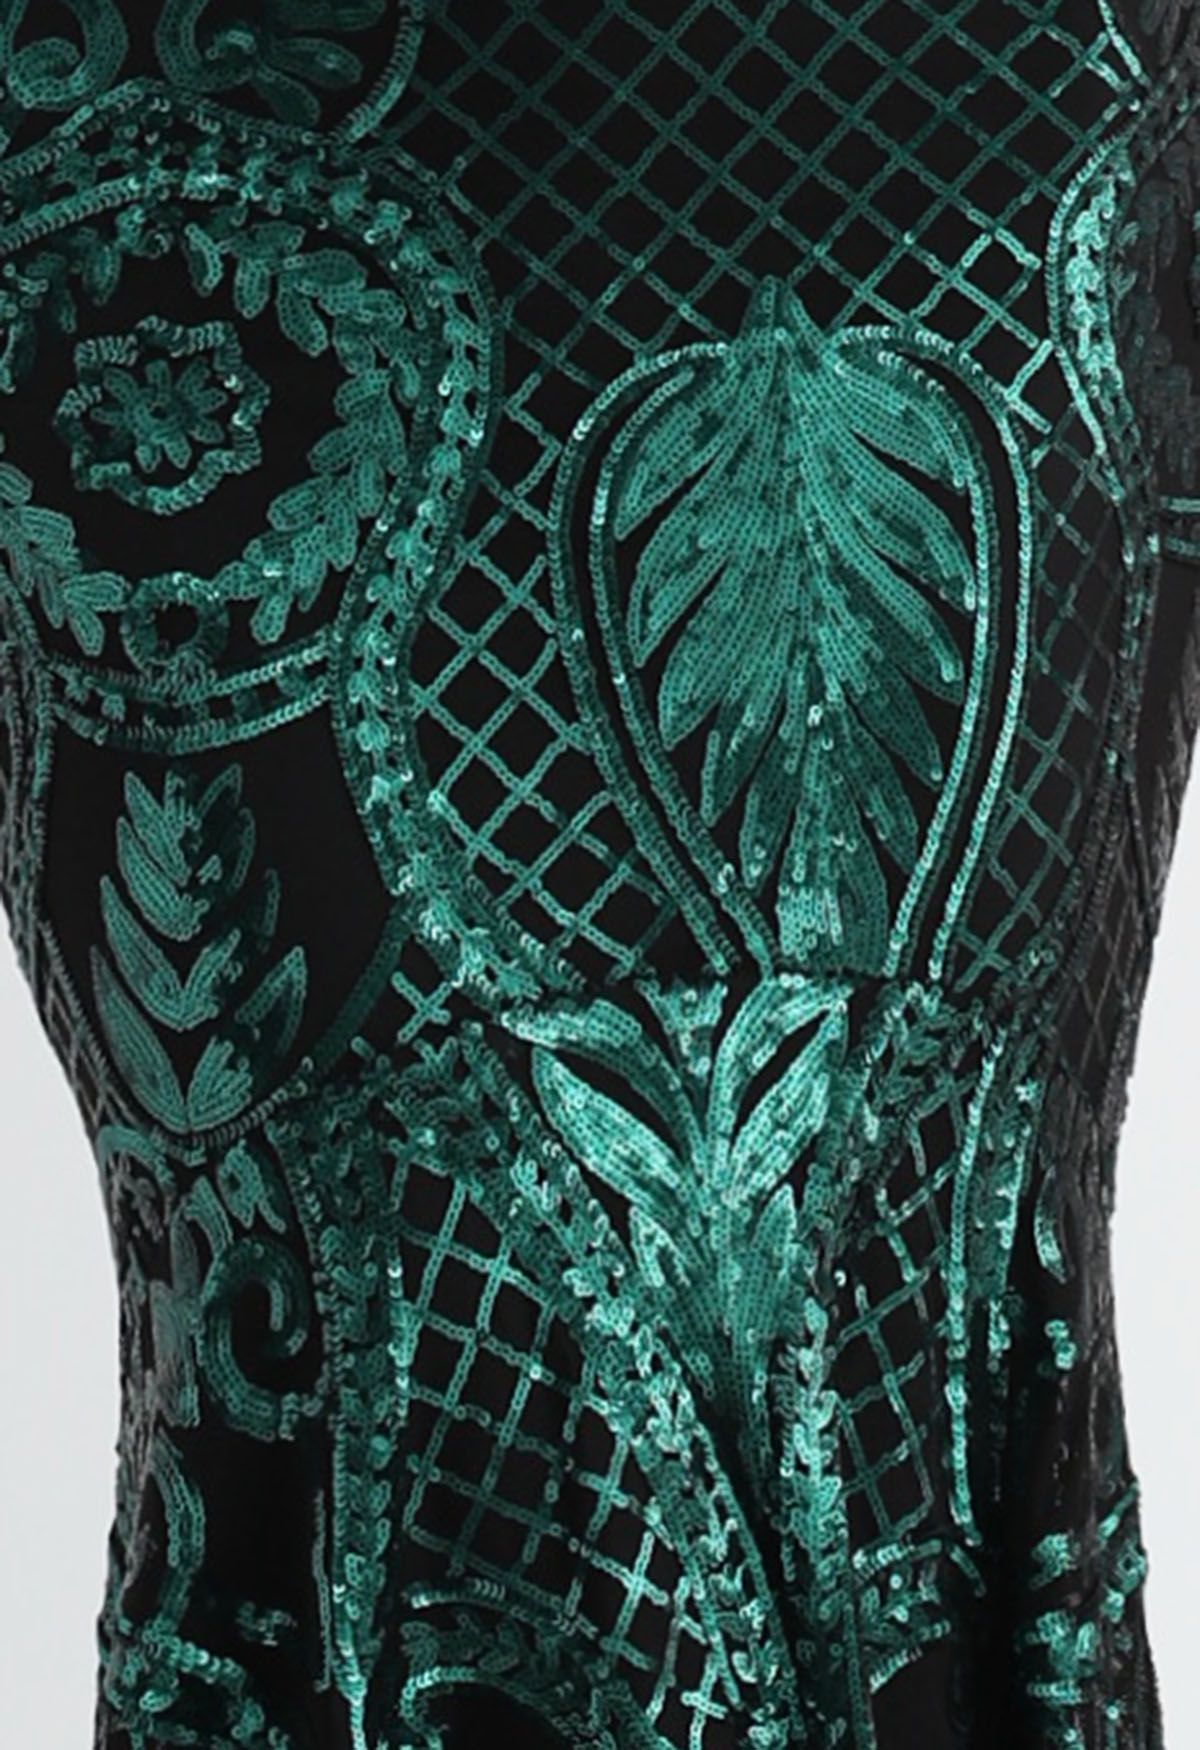 V-Neck Sequined Sleeveless Mermaid Gown in Dark Green